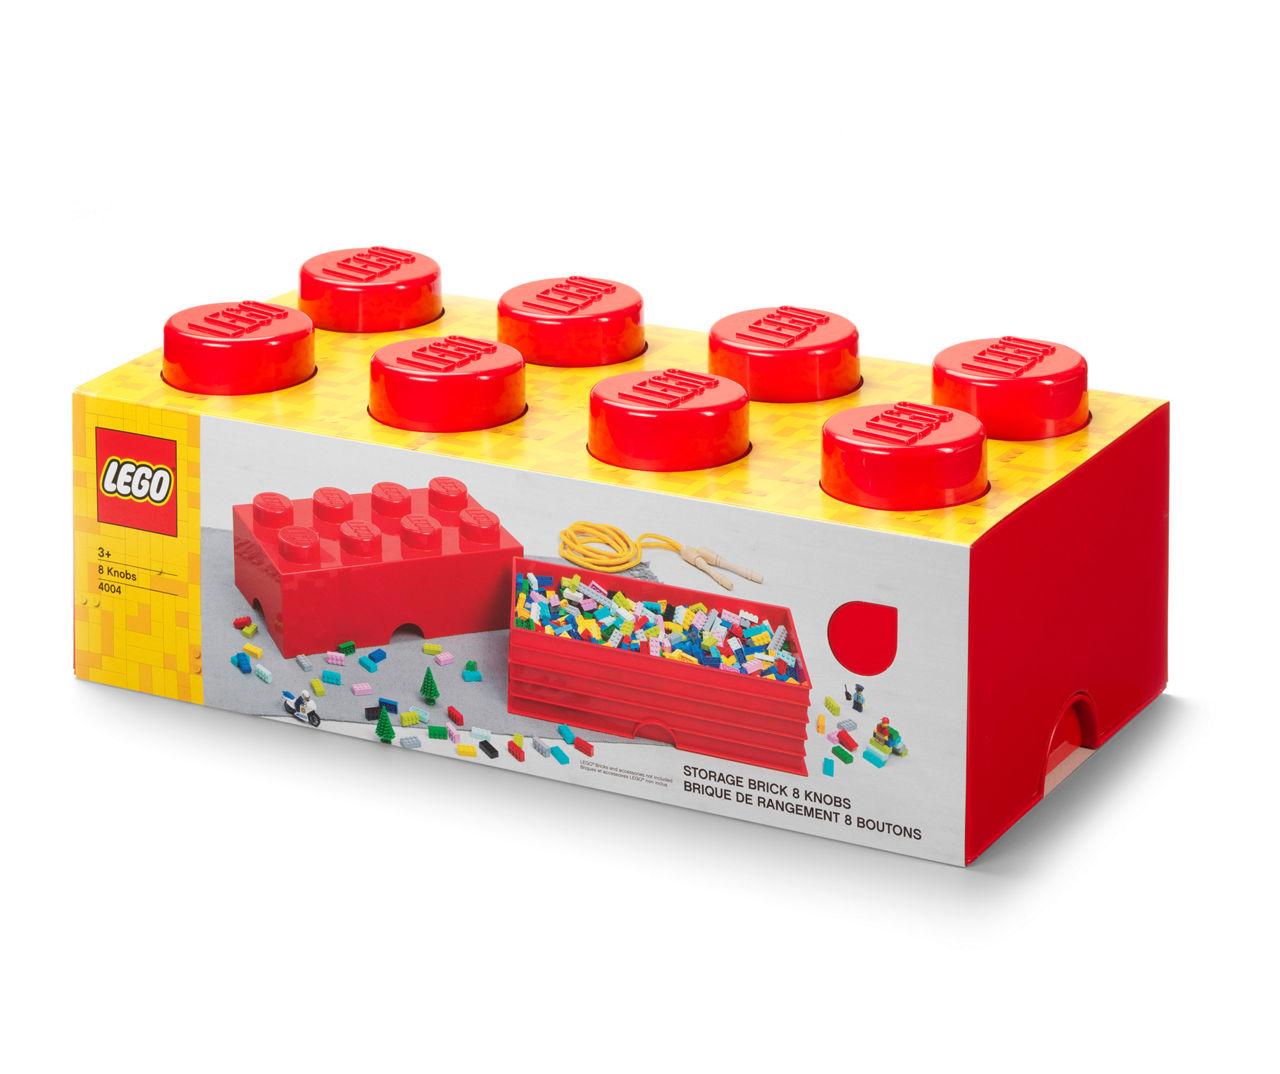 LEGO Sorting Box Brick Storage w/ Dividers, Red